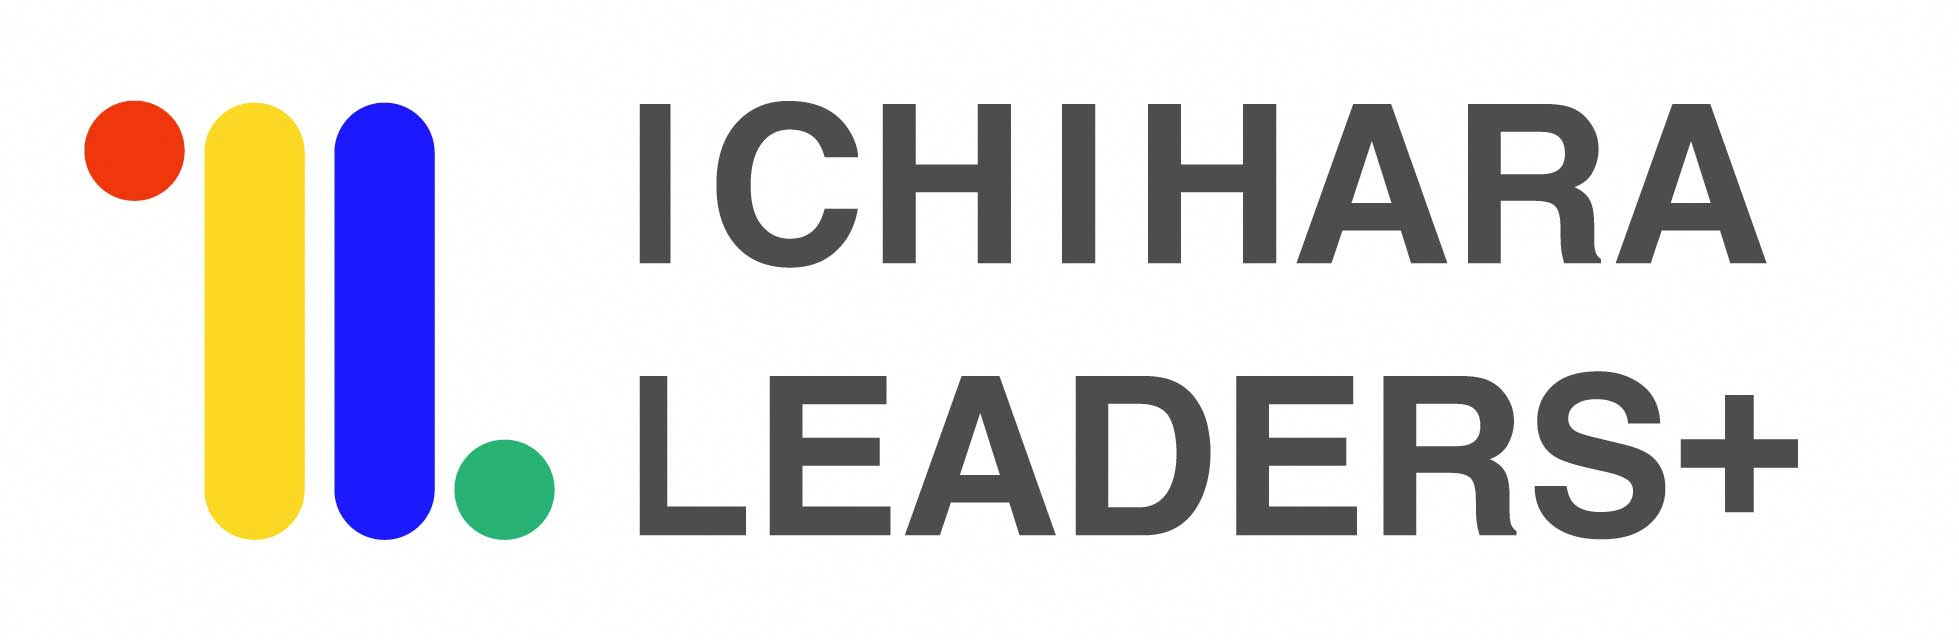 Leaders_ロゴ団体名.jpg